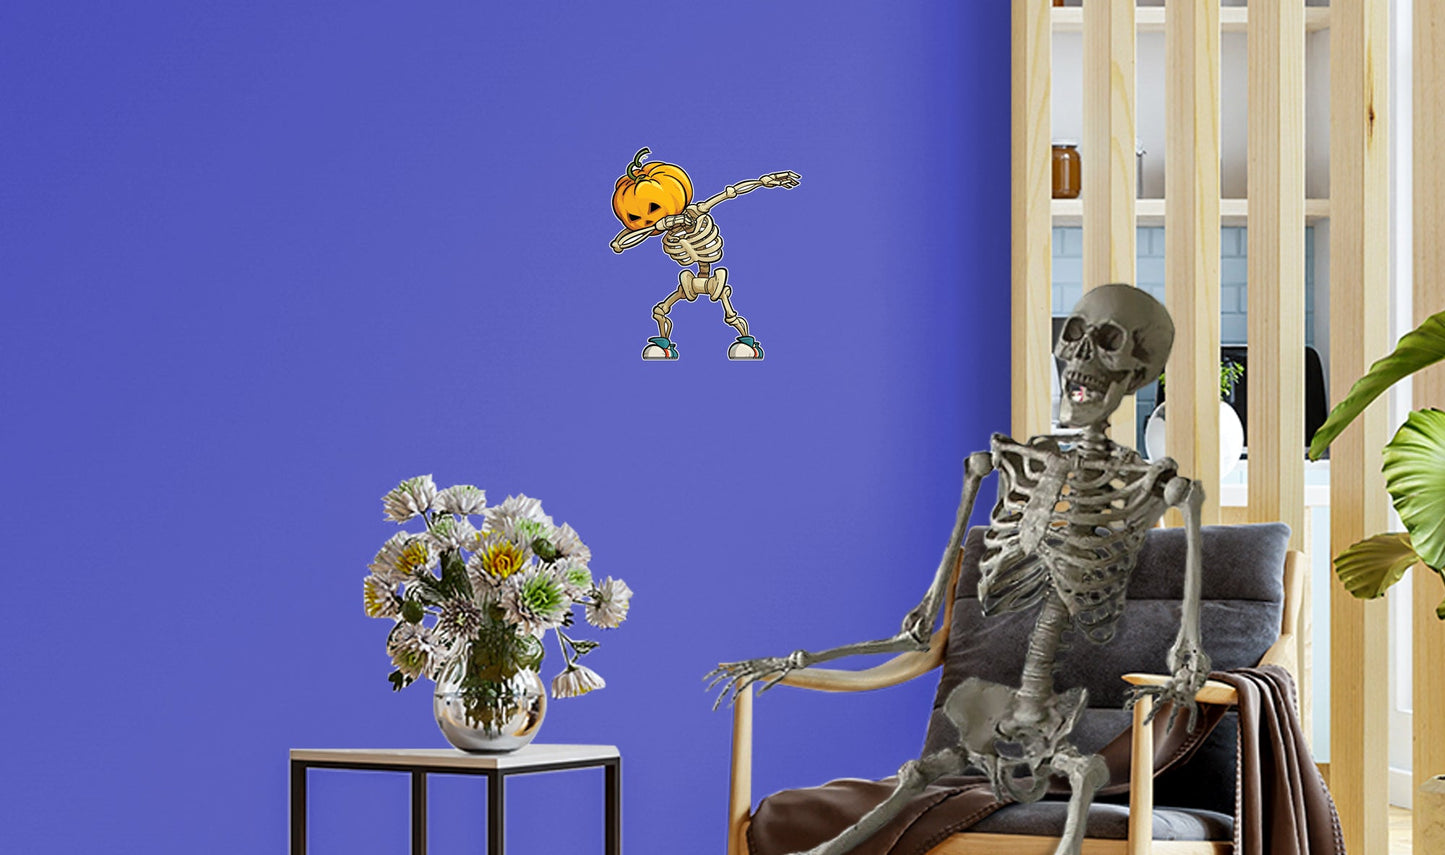 Halloween: Pumpkin Skeleton Dabbing Icon        -   Removable Wall   Adhesive Decal